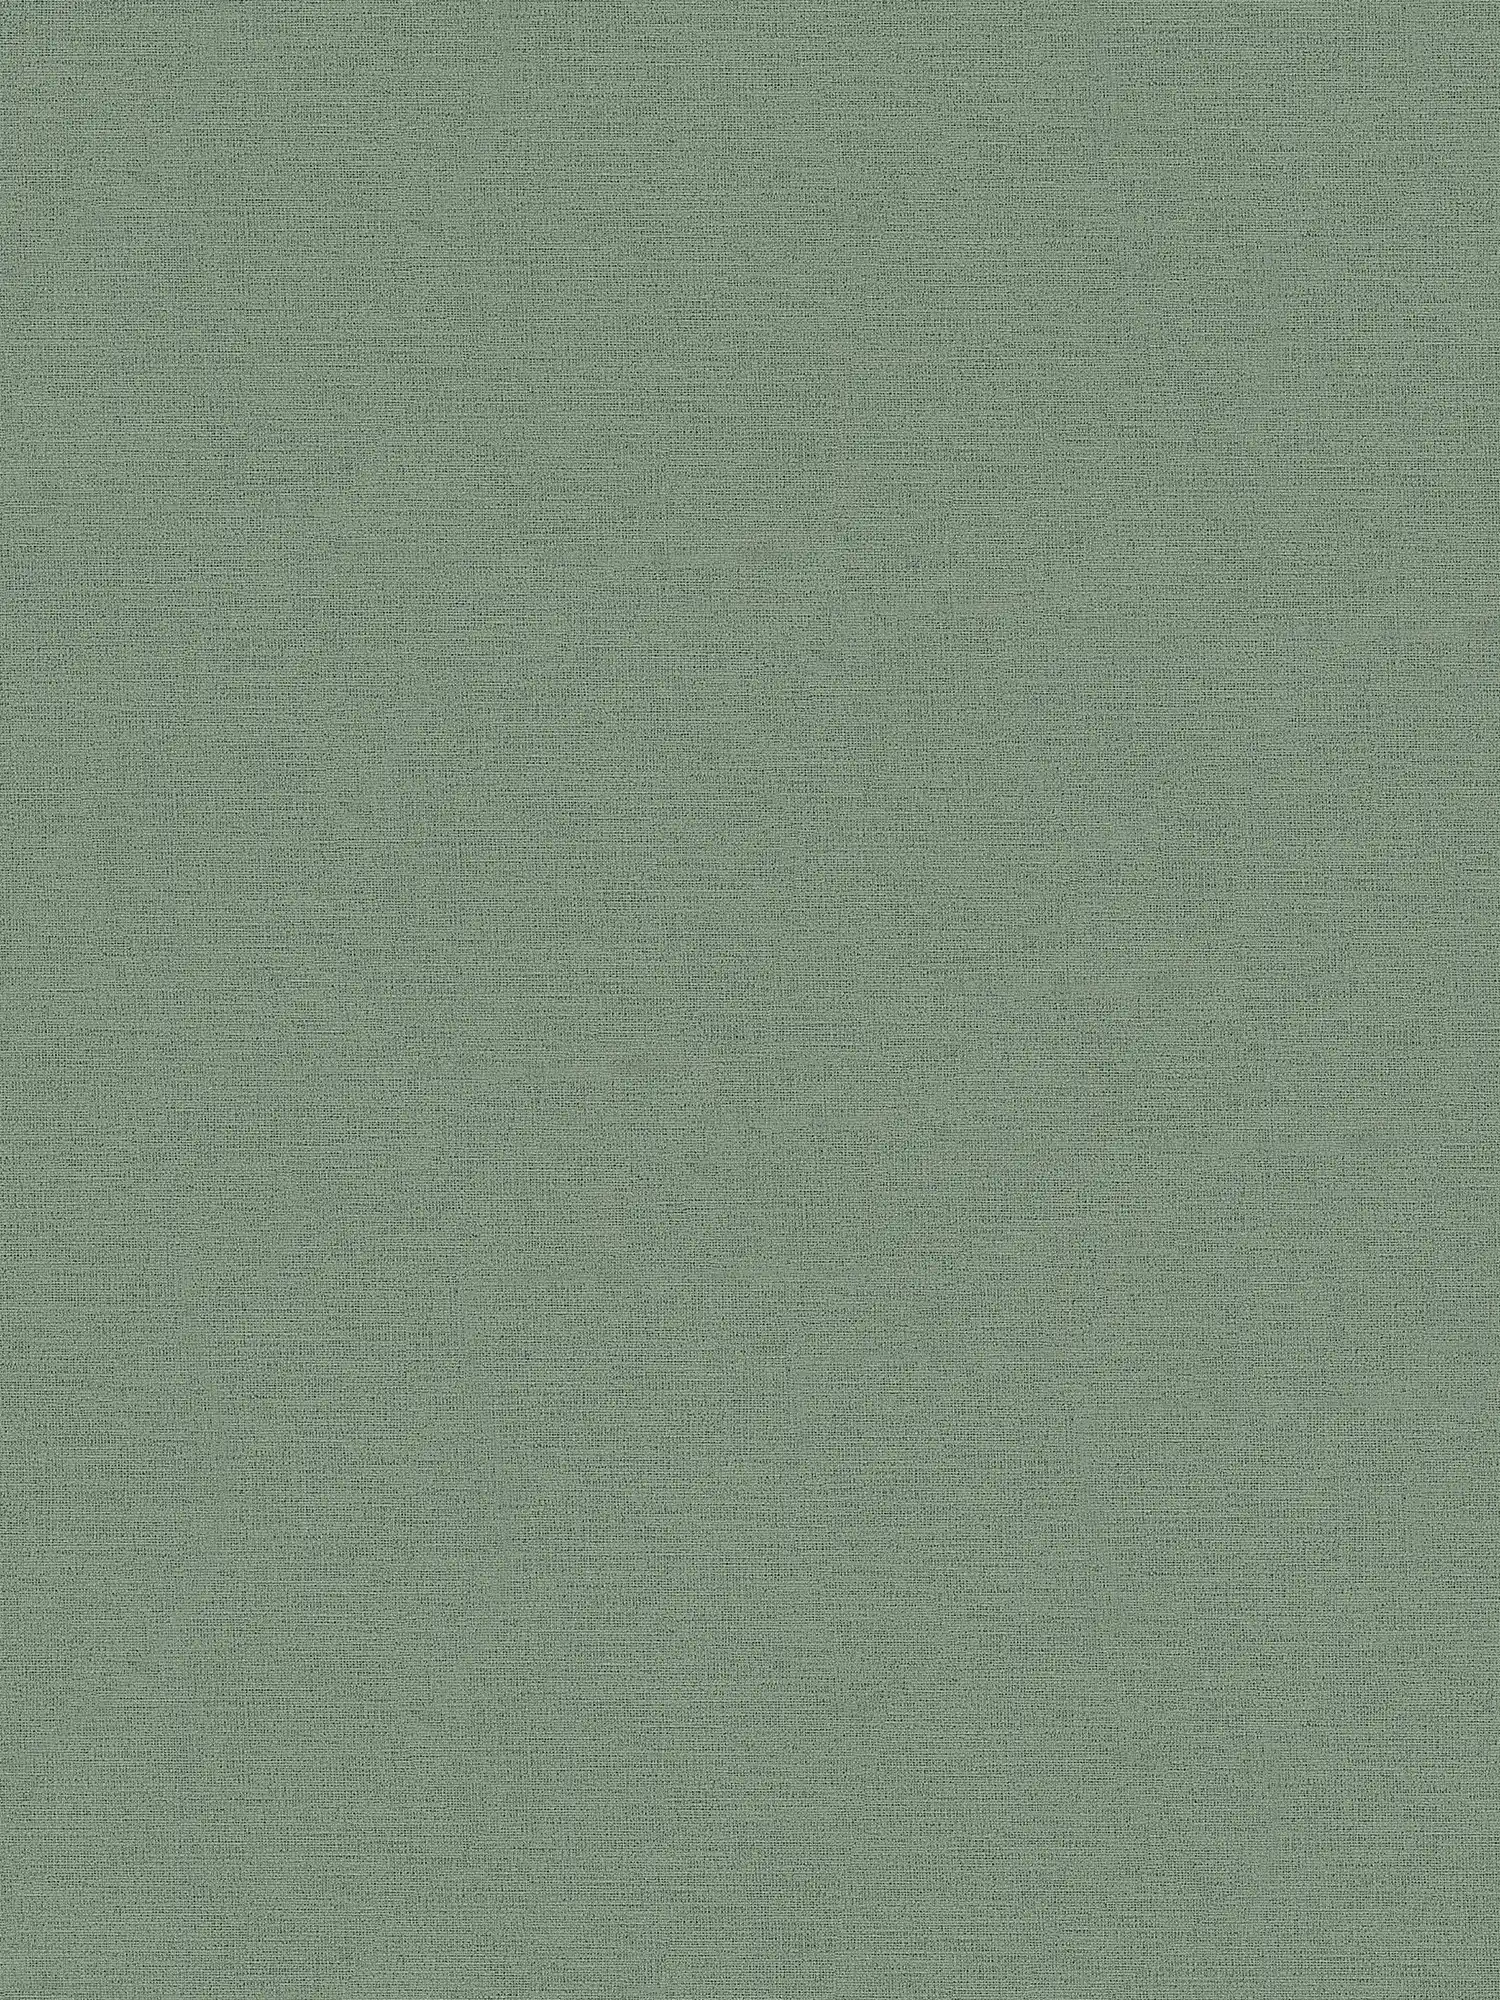 Vert Gris Papier peint vert olive, mat & aspect textile
